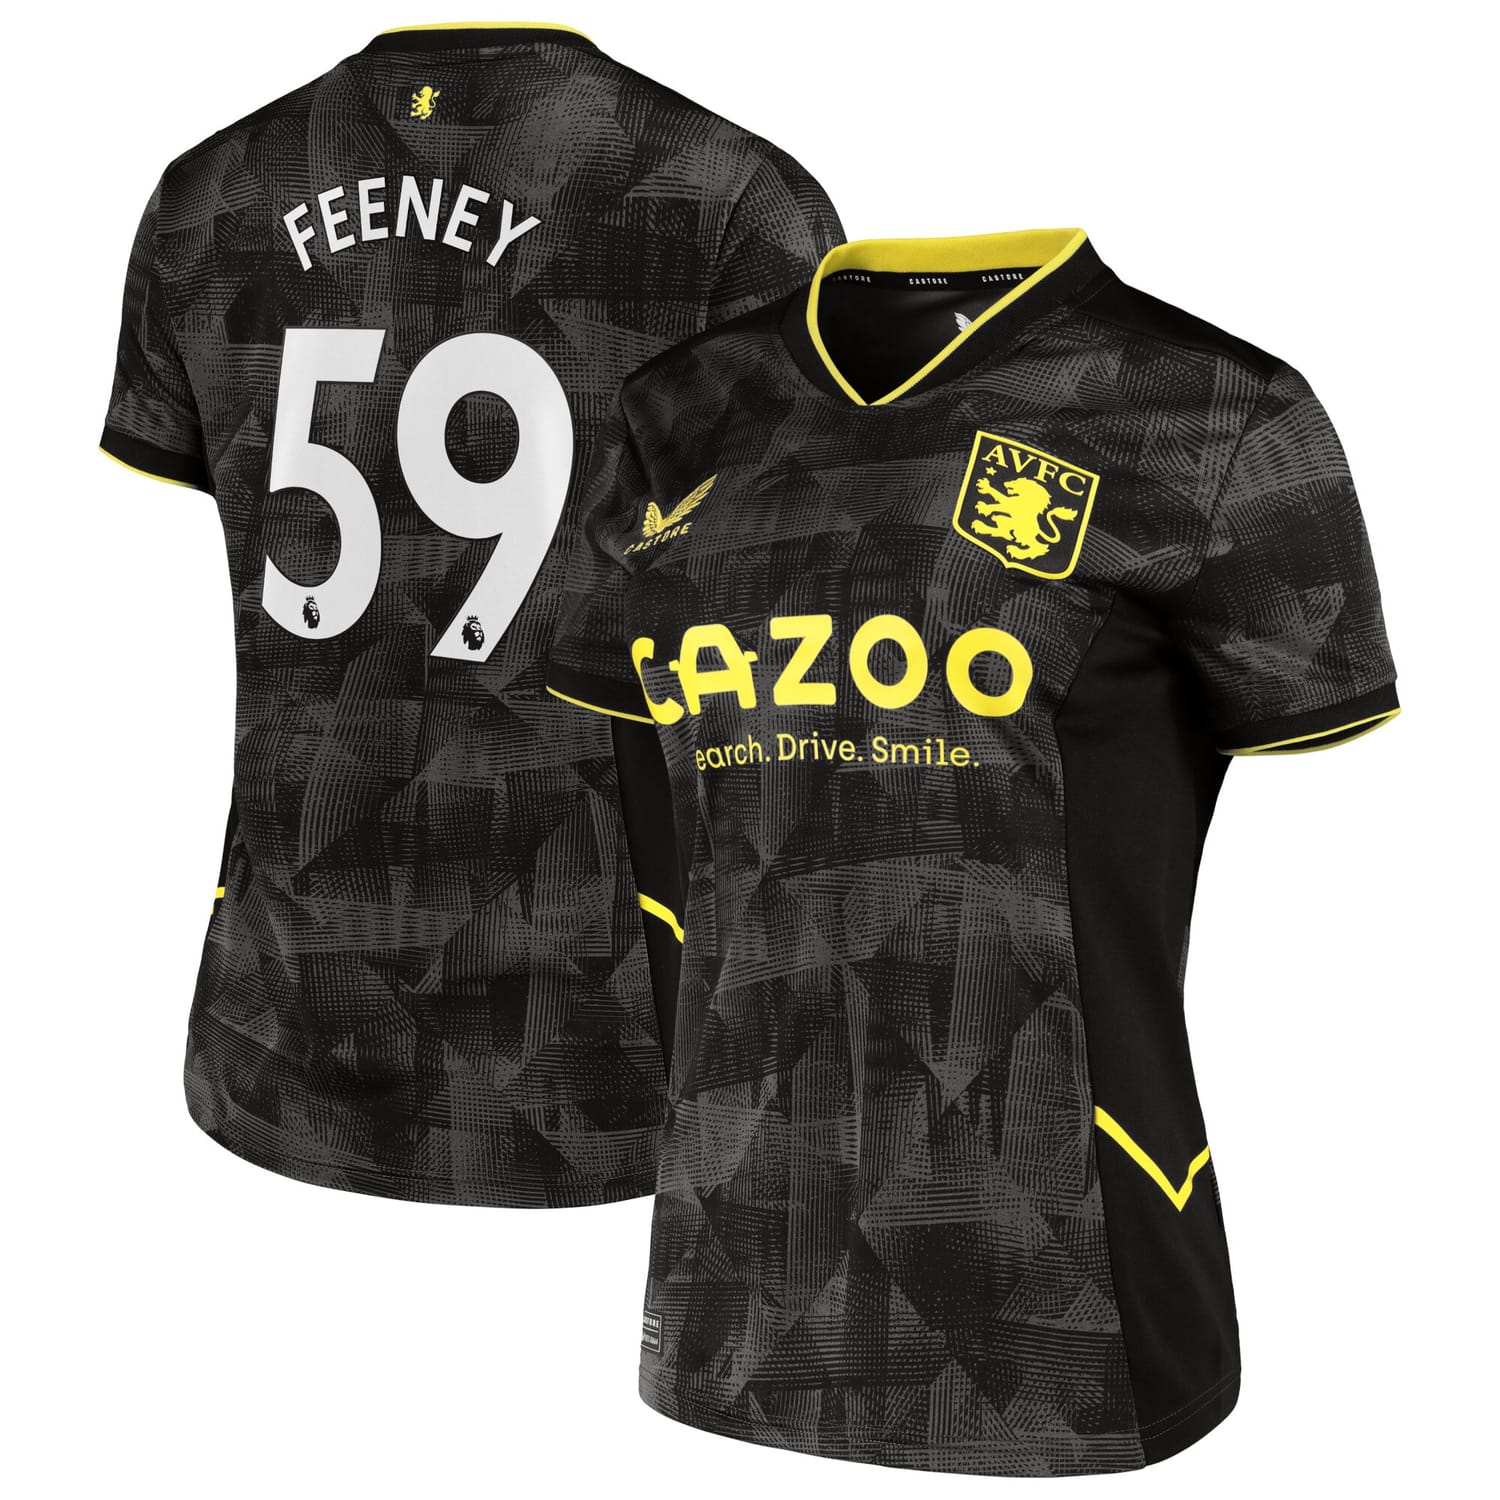 Premier League Aston Villa Third Jersey Shirt 2022-23 player Joshua Feeney 59 printing for Women